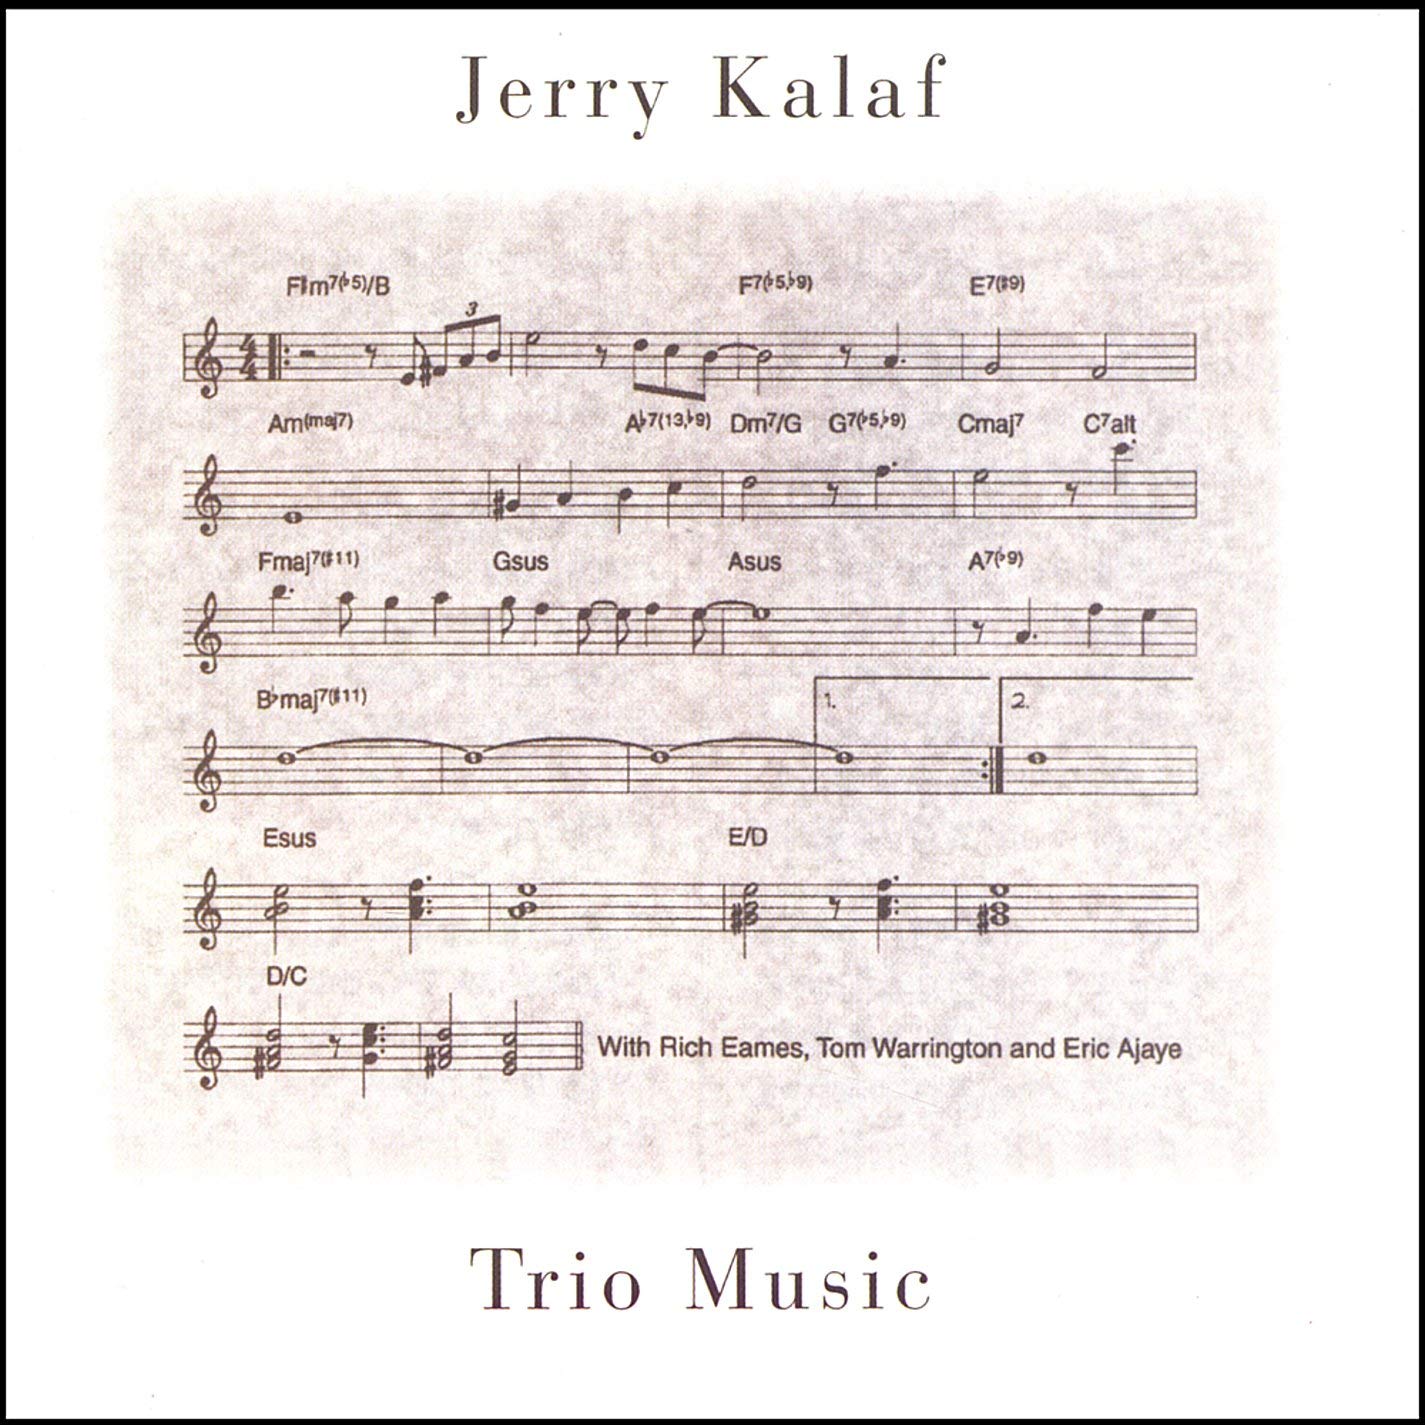 JERRY KALAF - Trio Music cover 